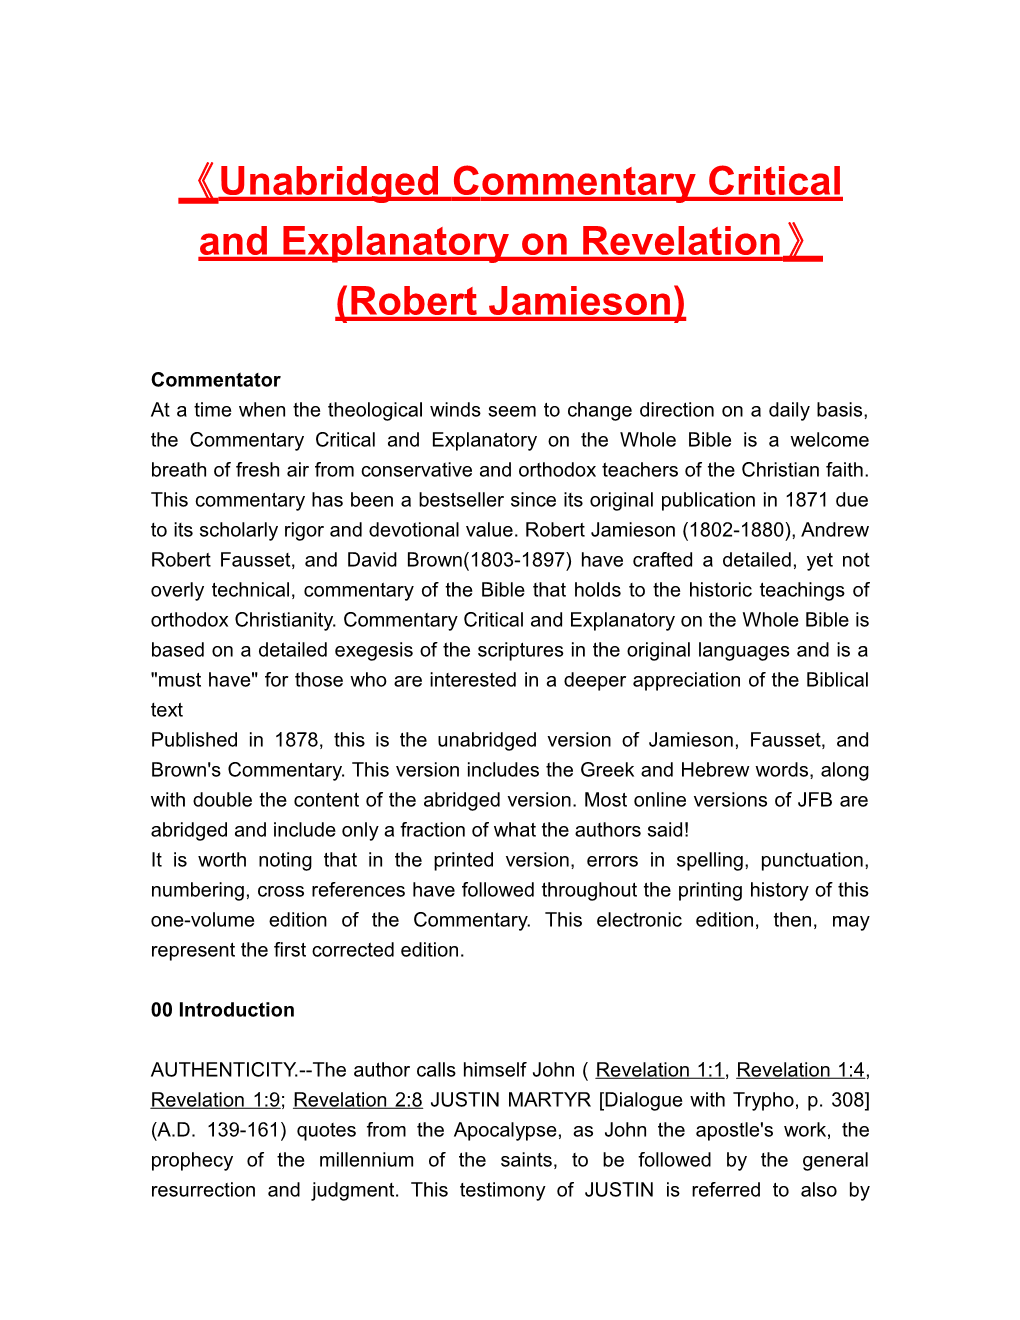 Unabridged Commentarycritical and Explanatory on Revelation (Robert Jamieson)